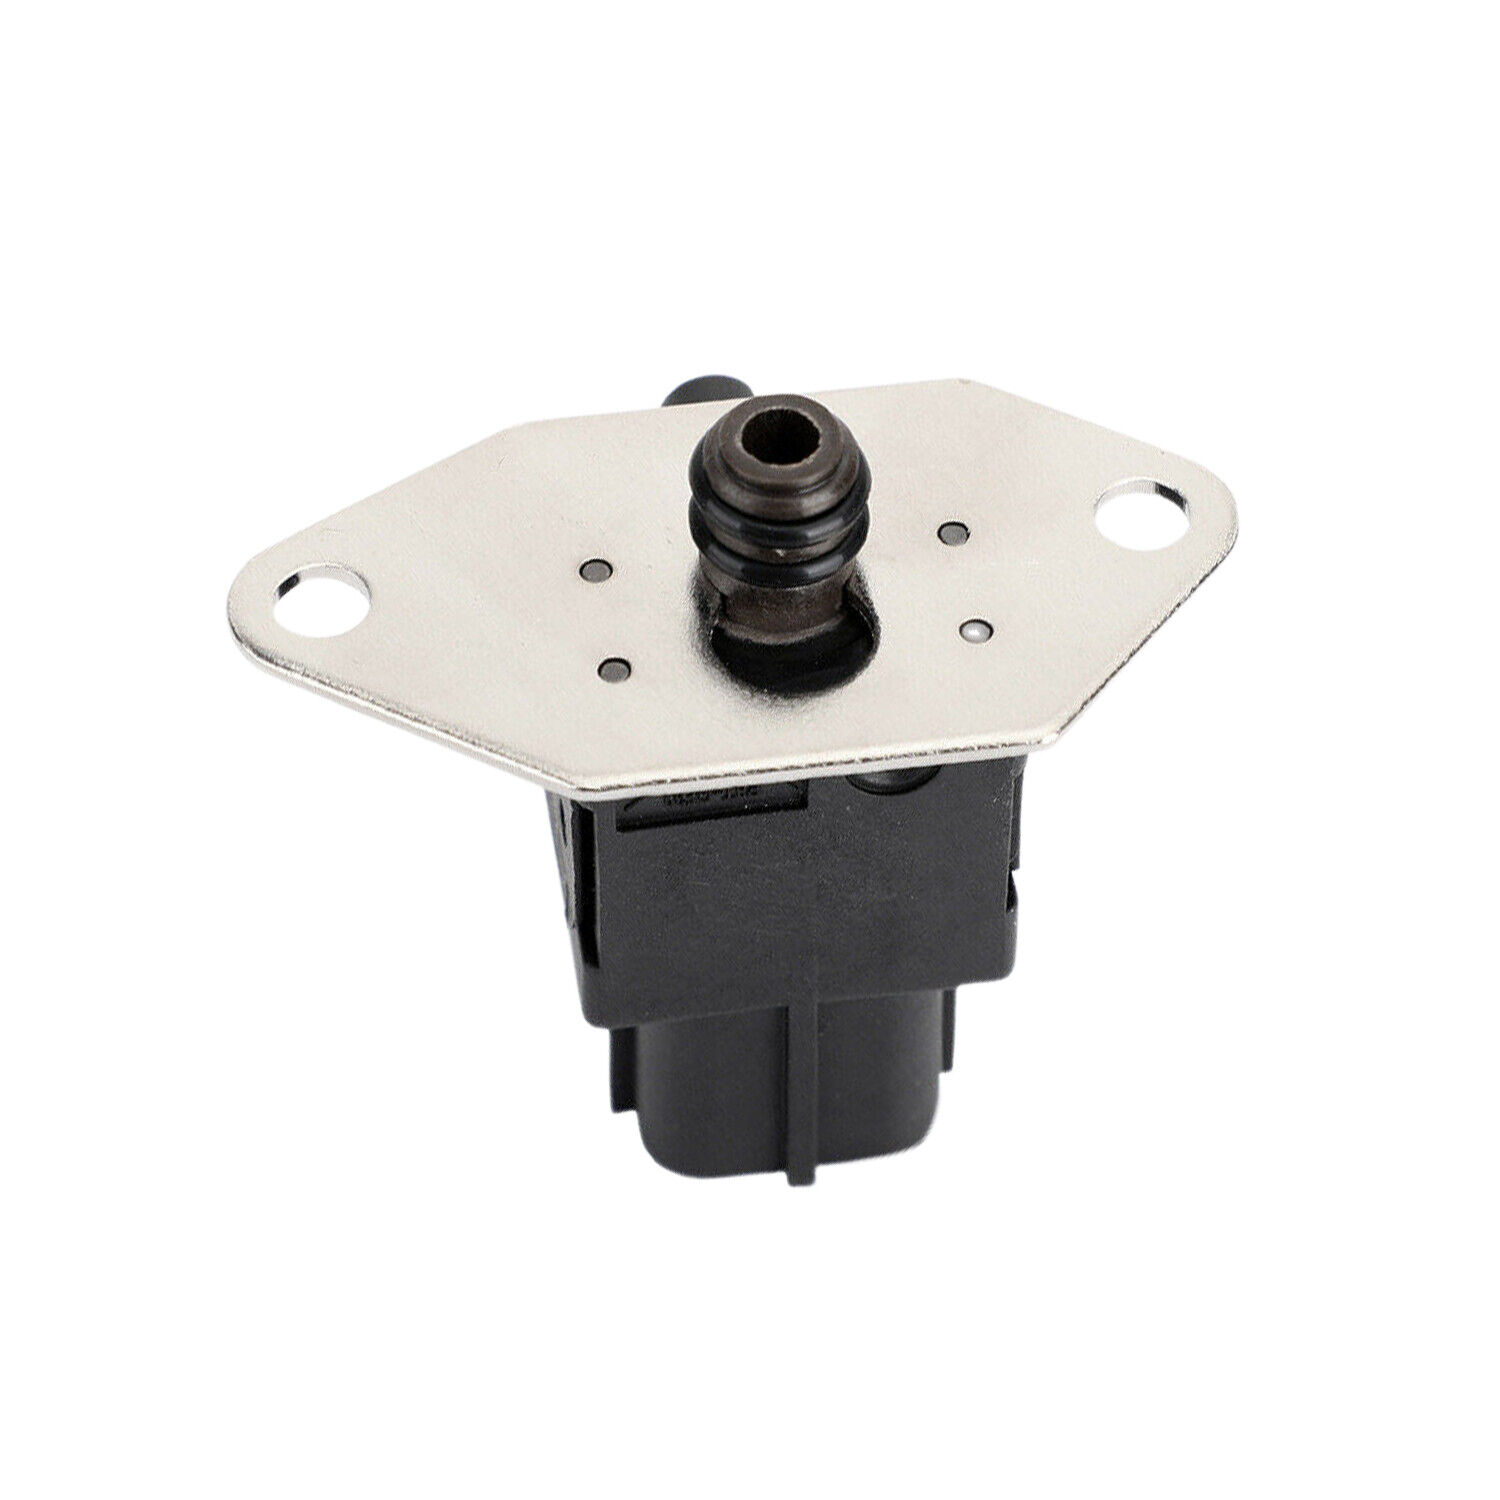 Fuel Injection Pressure Regulator Sensor Fit For Ford E-150 E-250 F-150 3R3E9F972AA - image 4 of 5